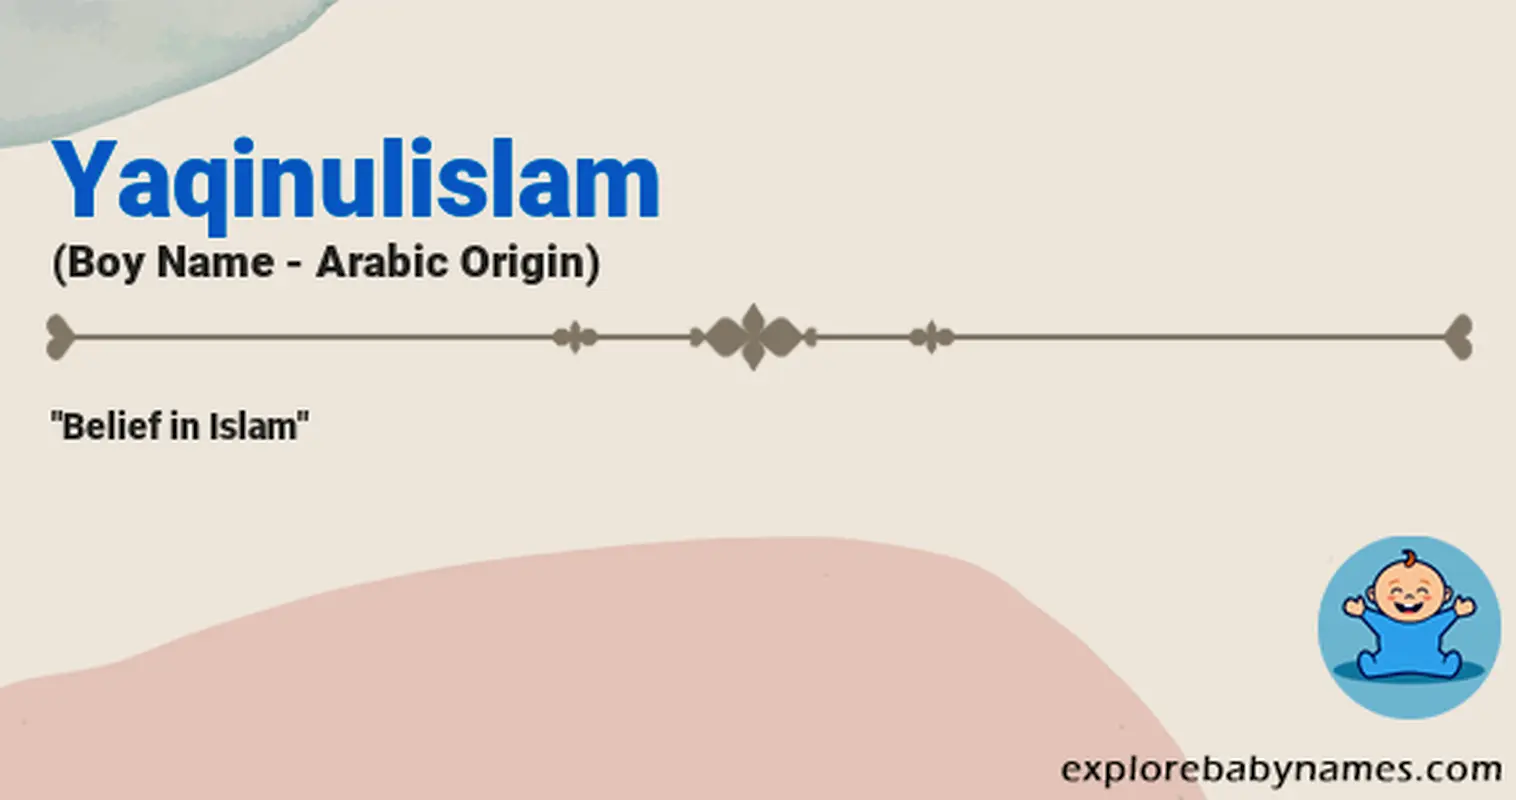 Meaning of Yaqinulislam